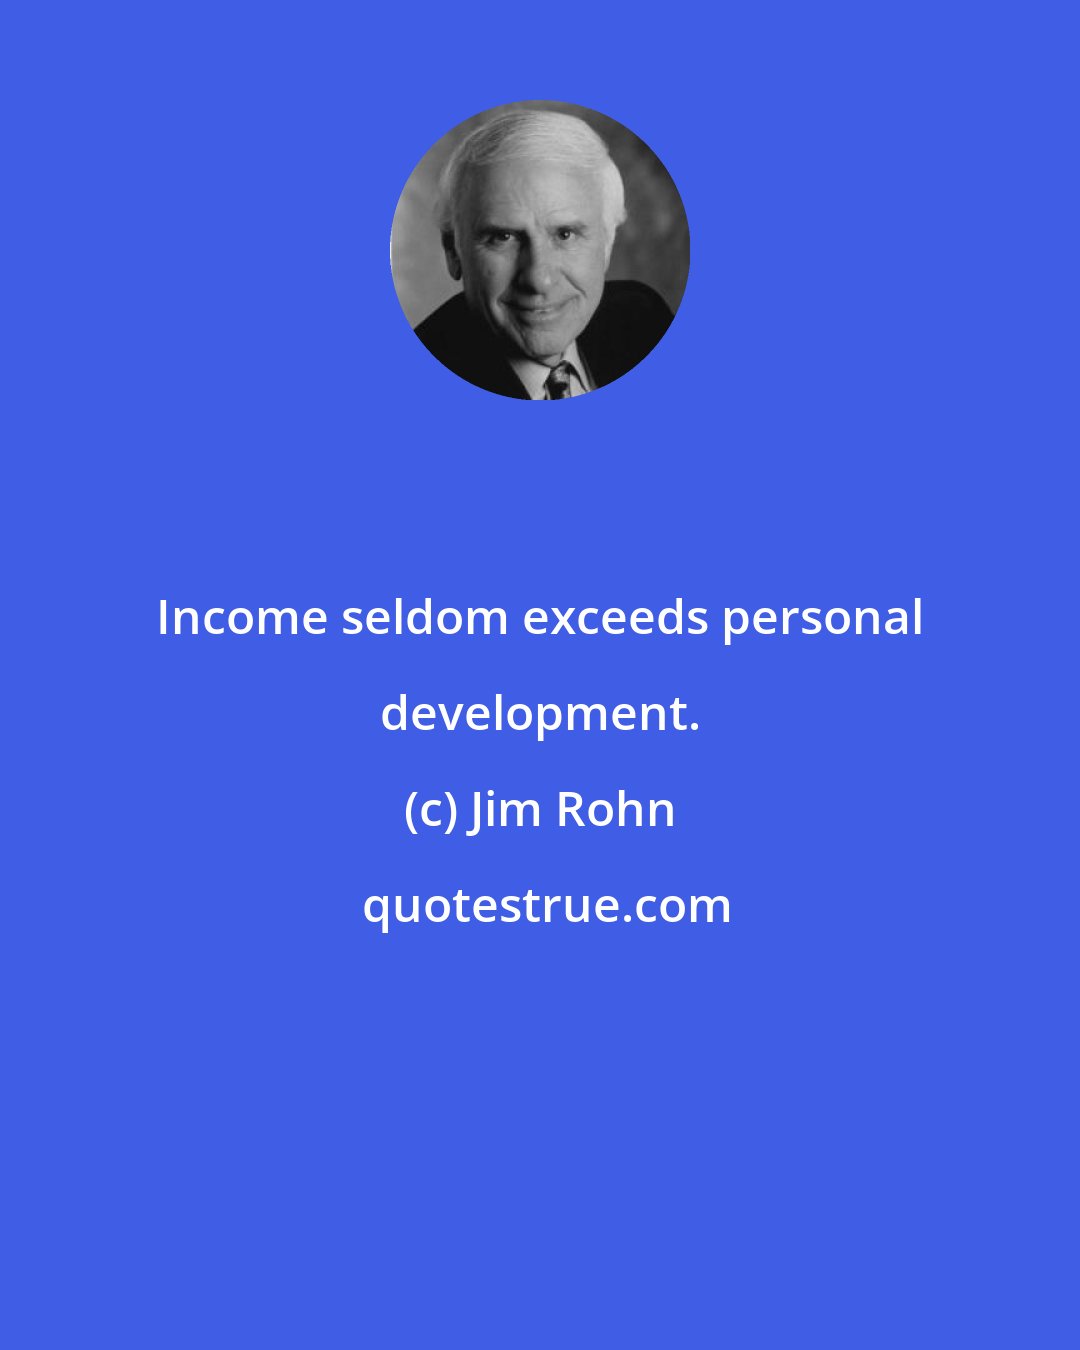 Jim Rohn: Income seldom exceeds personal development.